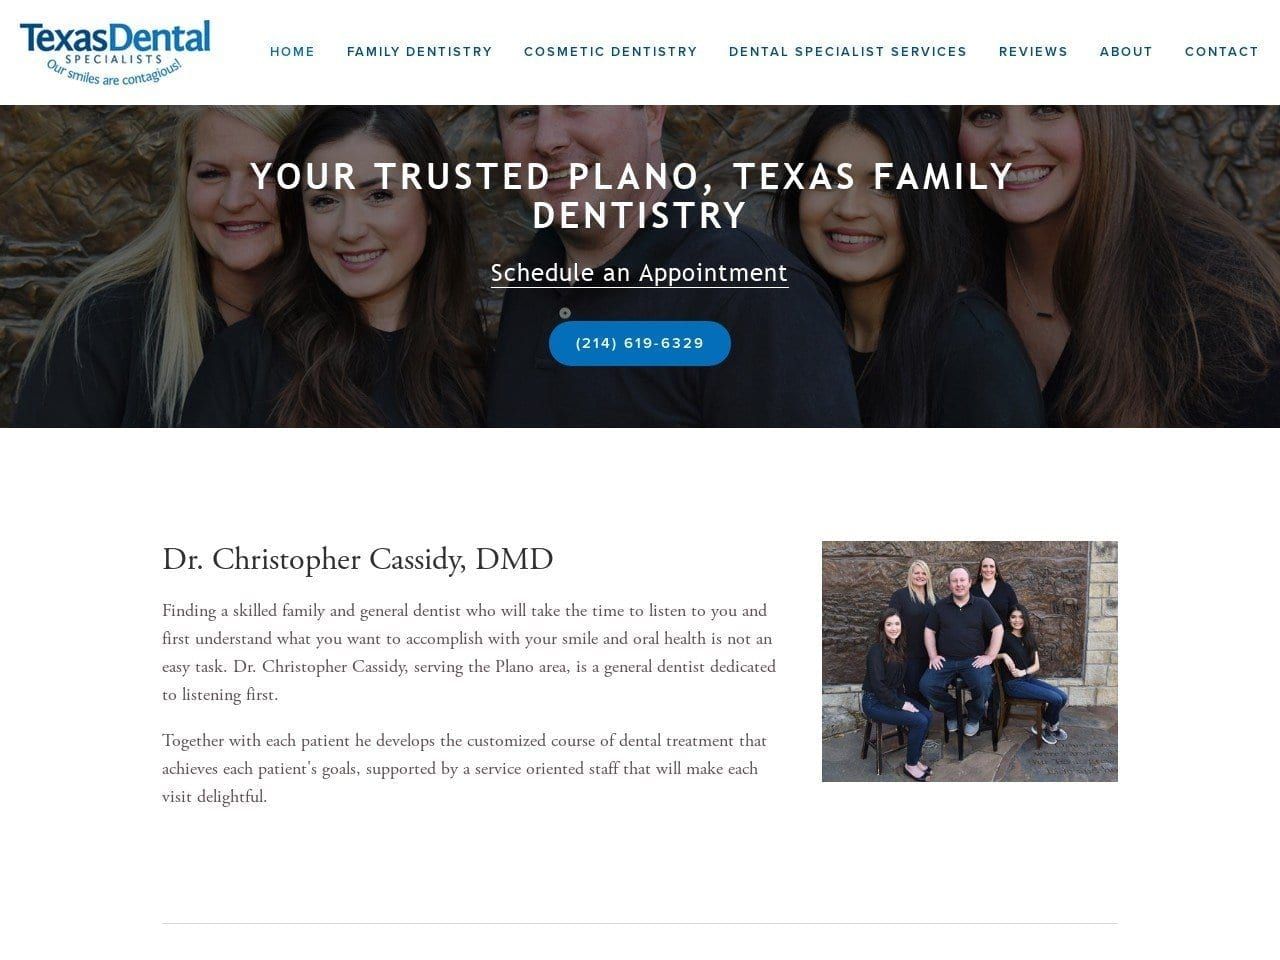 Texas Dental Specialists Website Screenshot from texasdentalspecialists.com